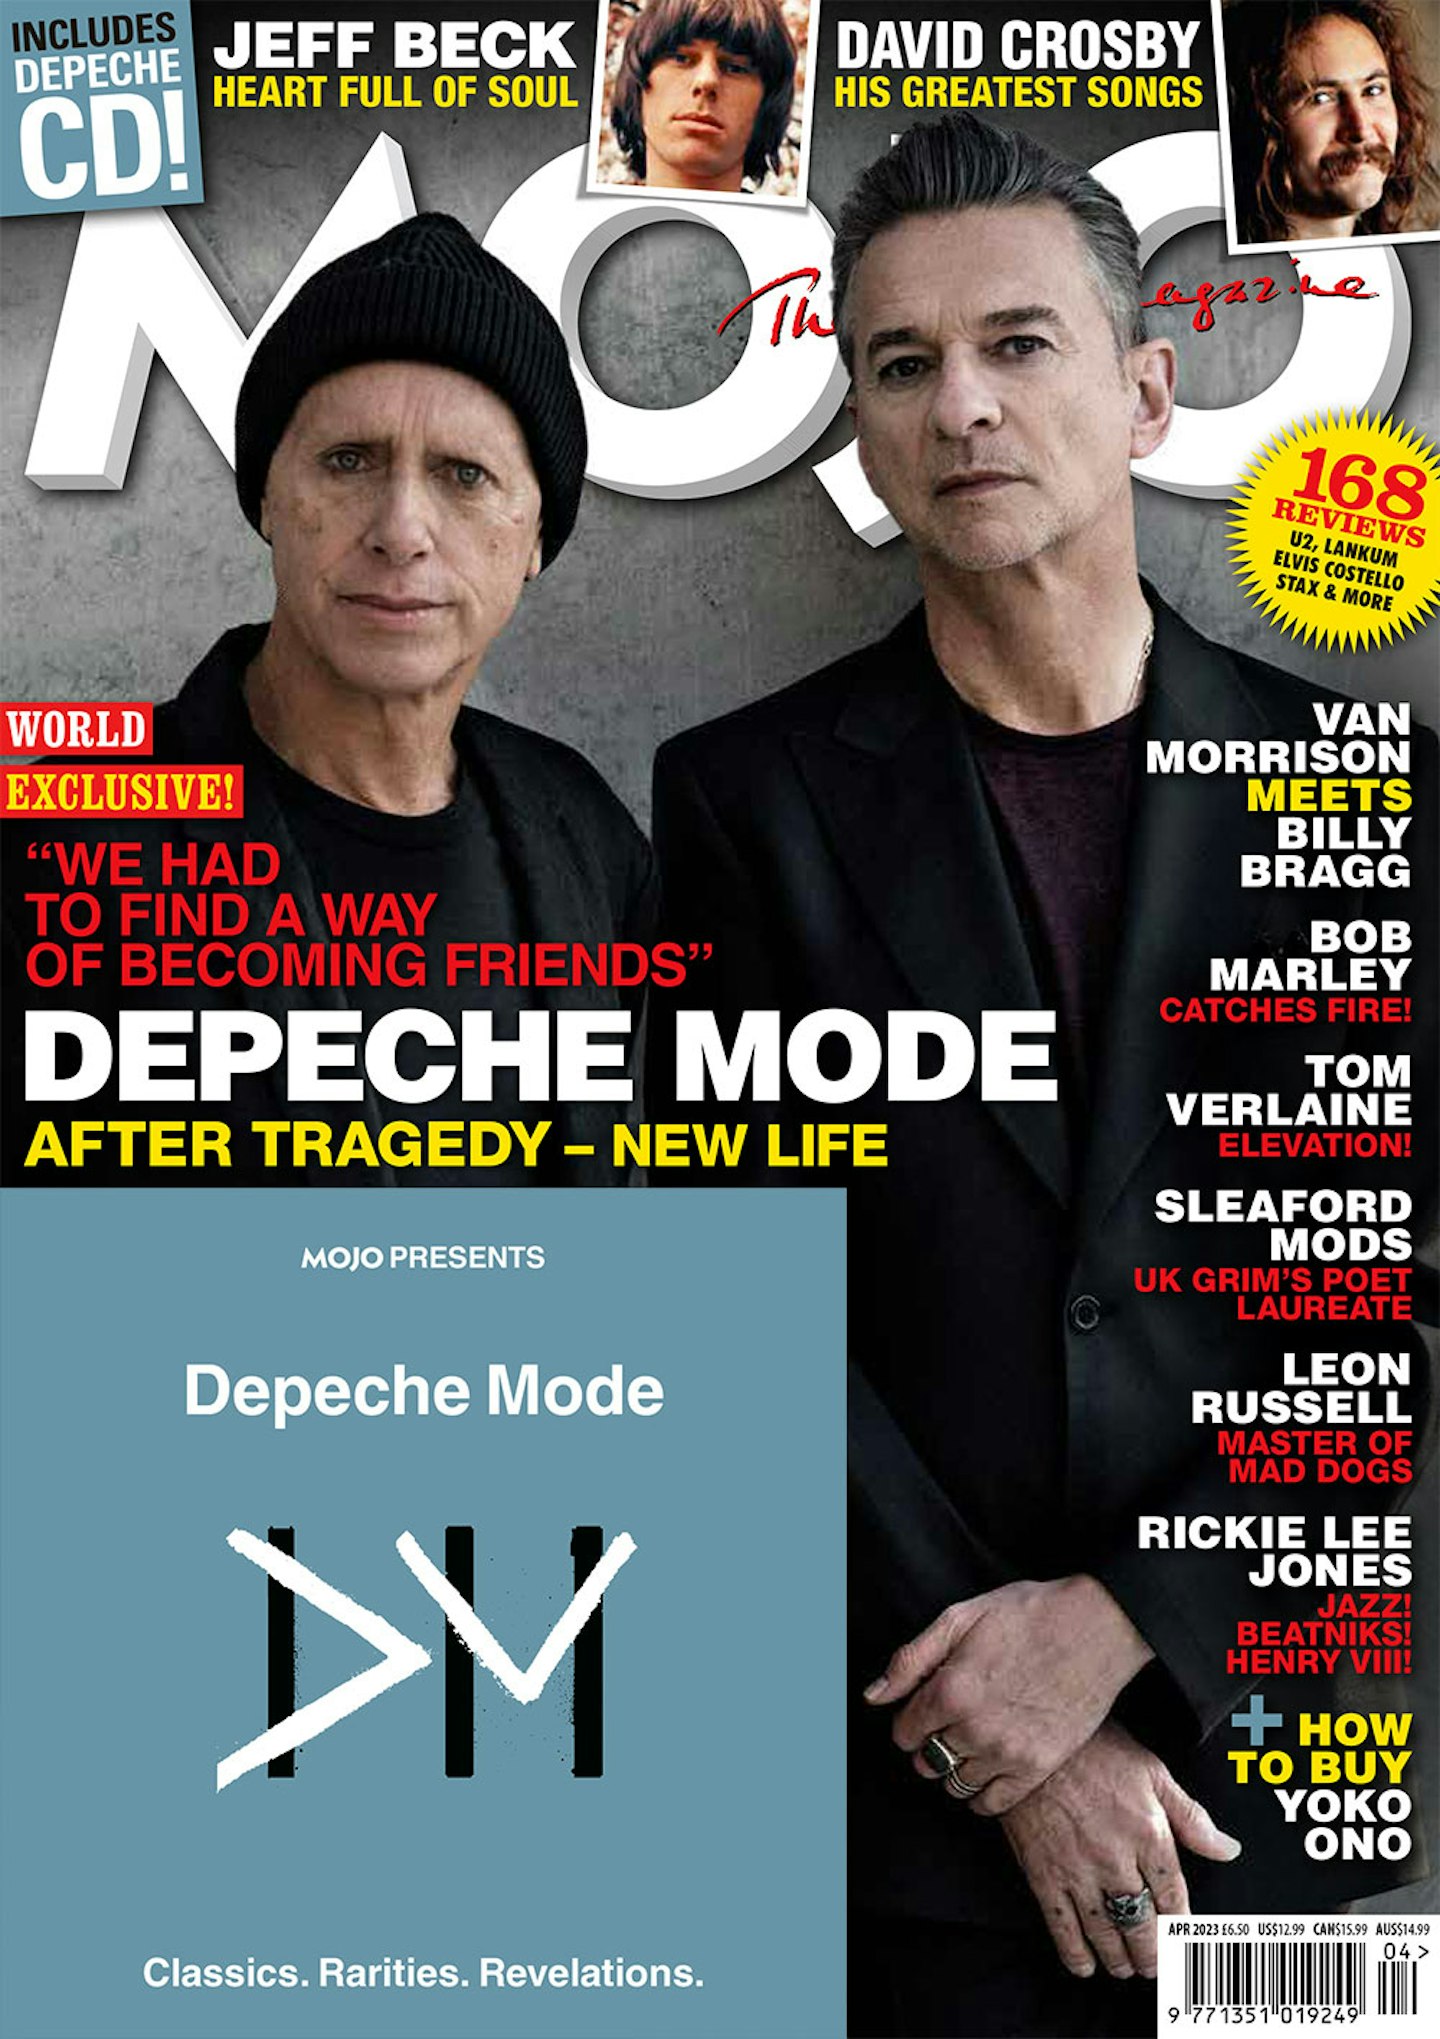 Depeche Mode Exclusive Interview In New MOJO Magazine